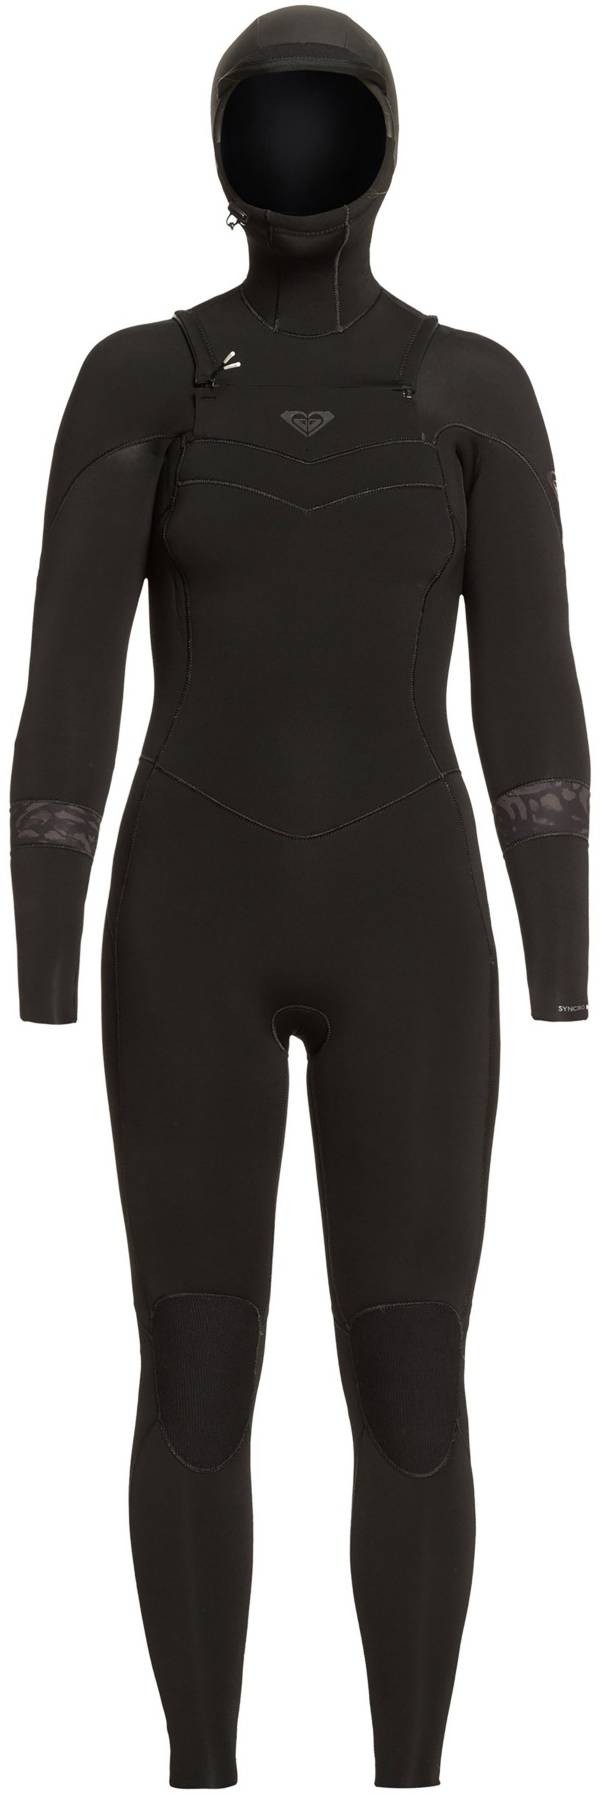 Roxy 5/4/3 Syncro Full Zip Wetsuit product image